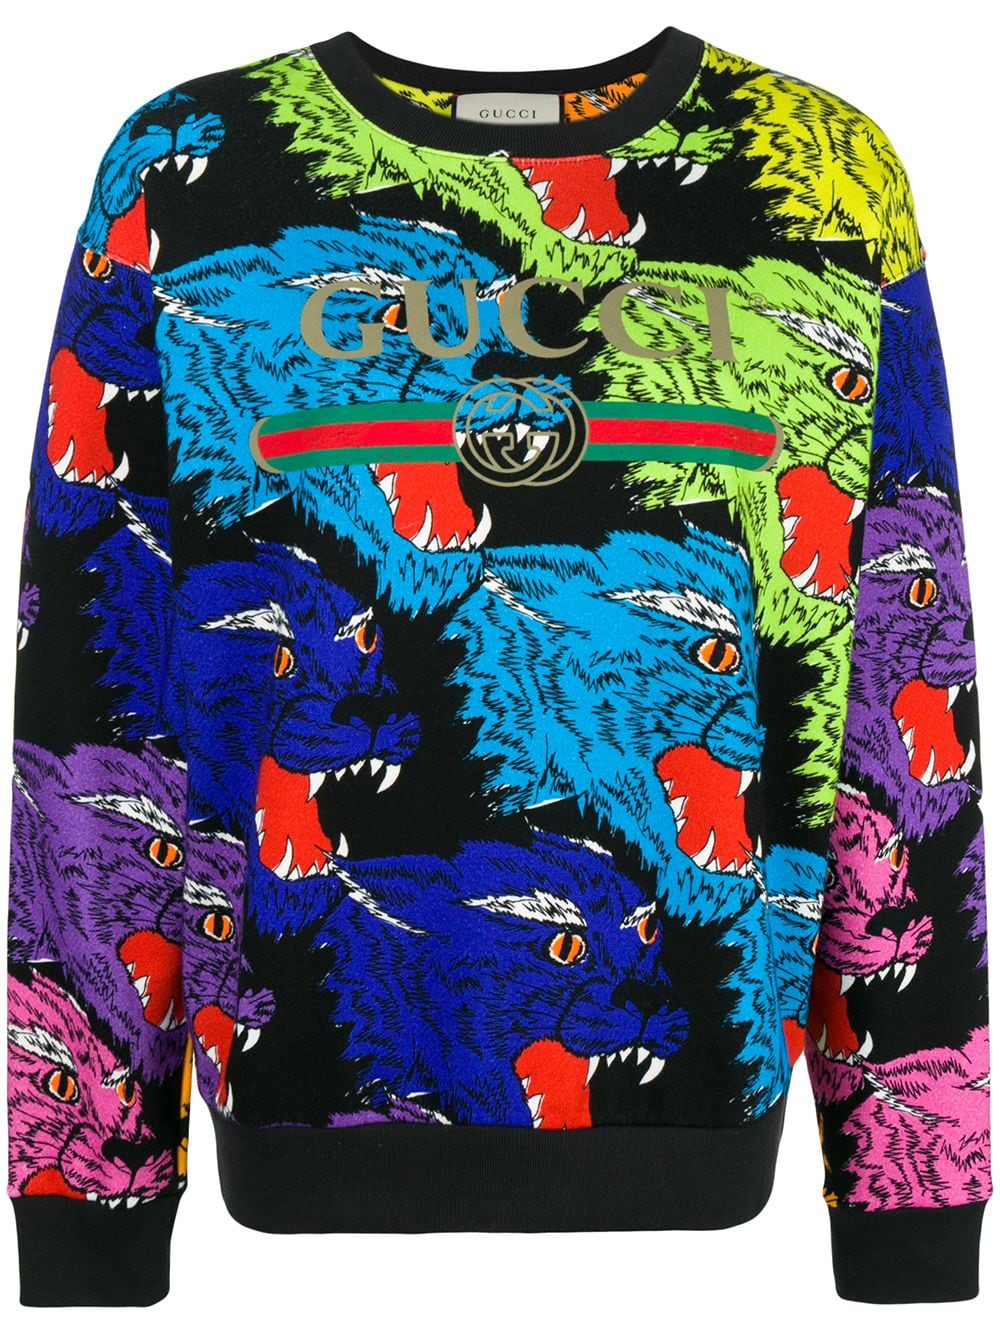 Gucci Tijger Intarsiasweater Zwart